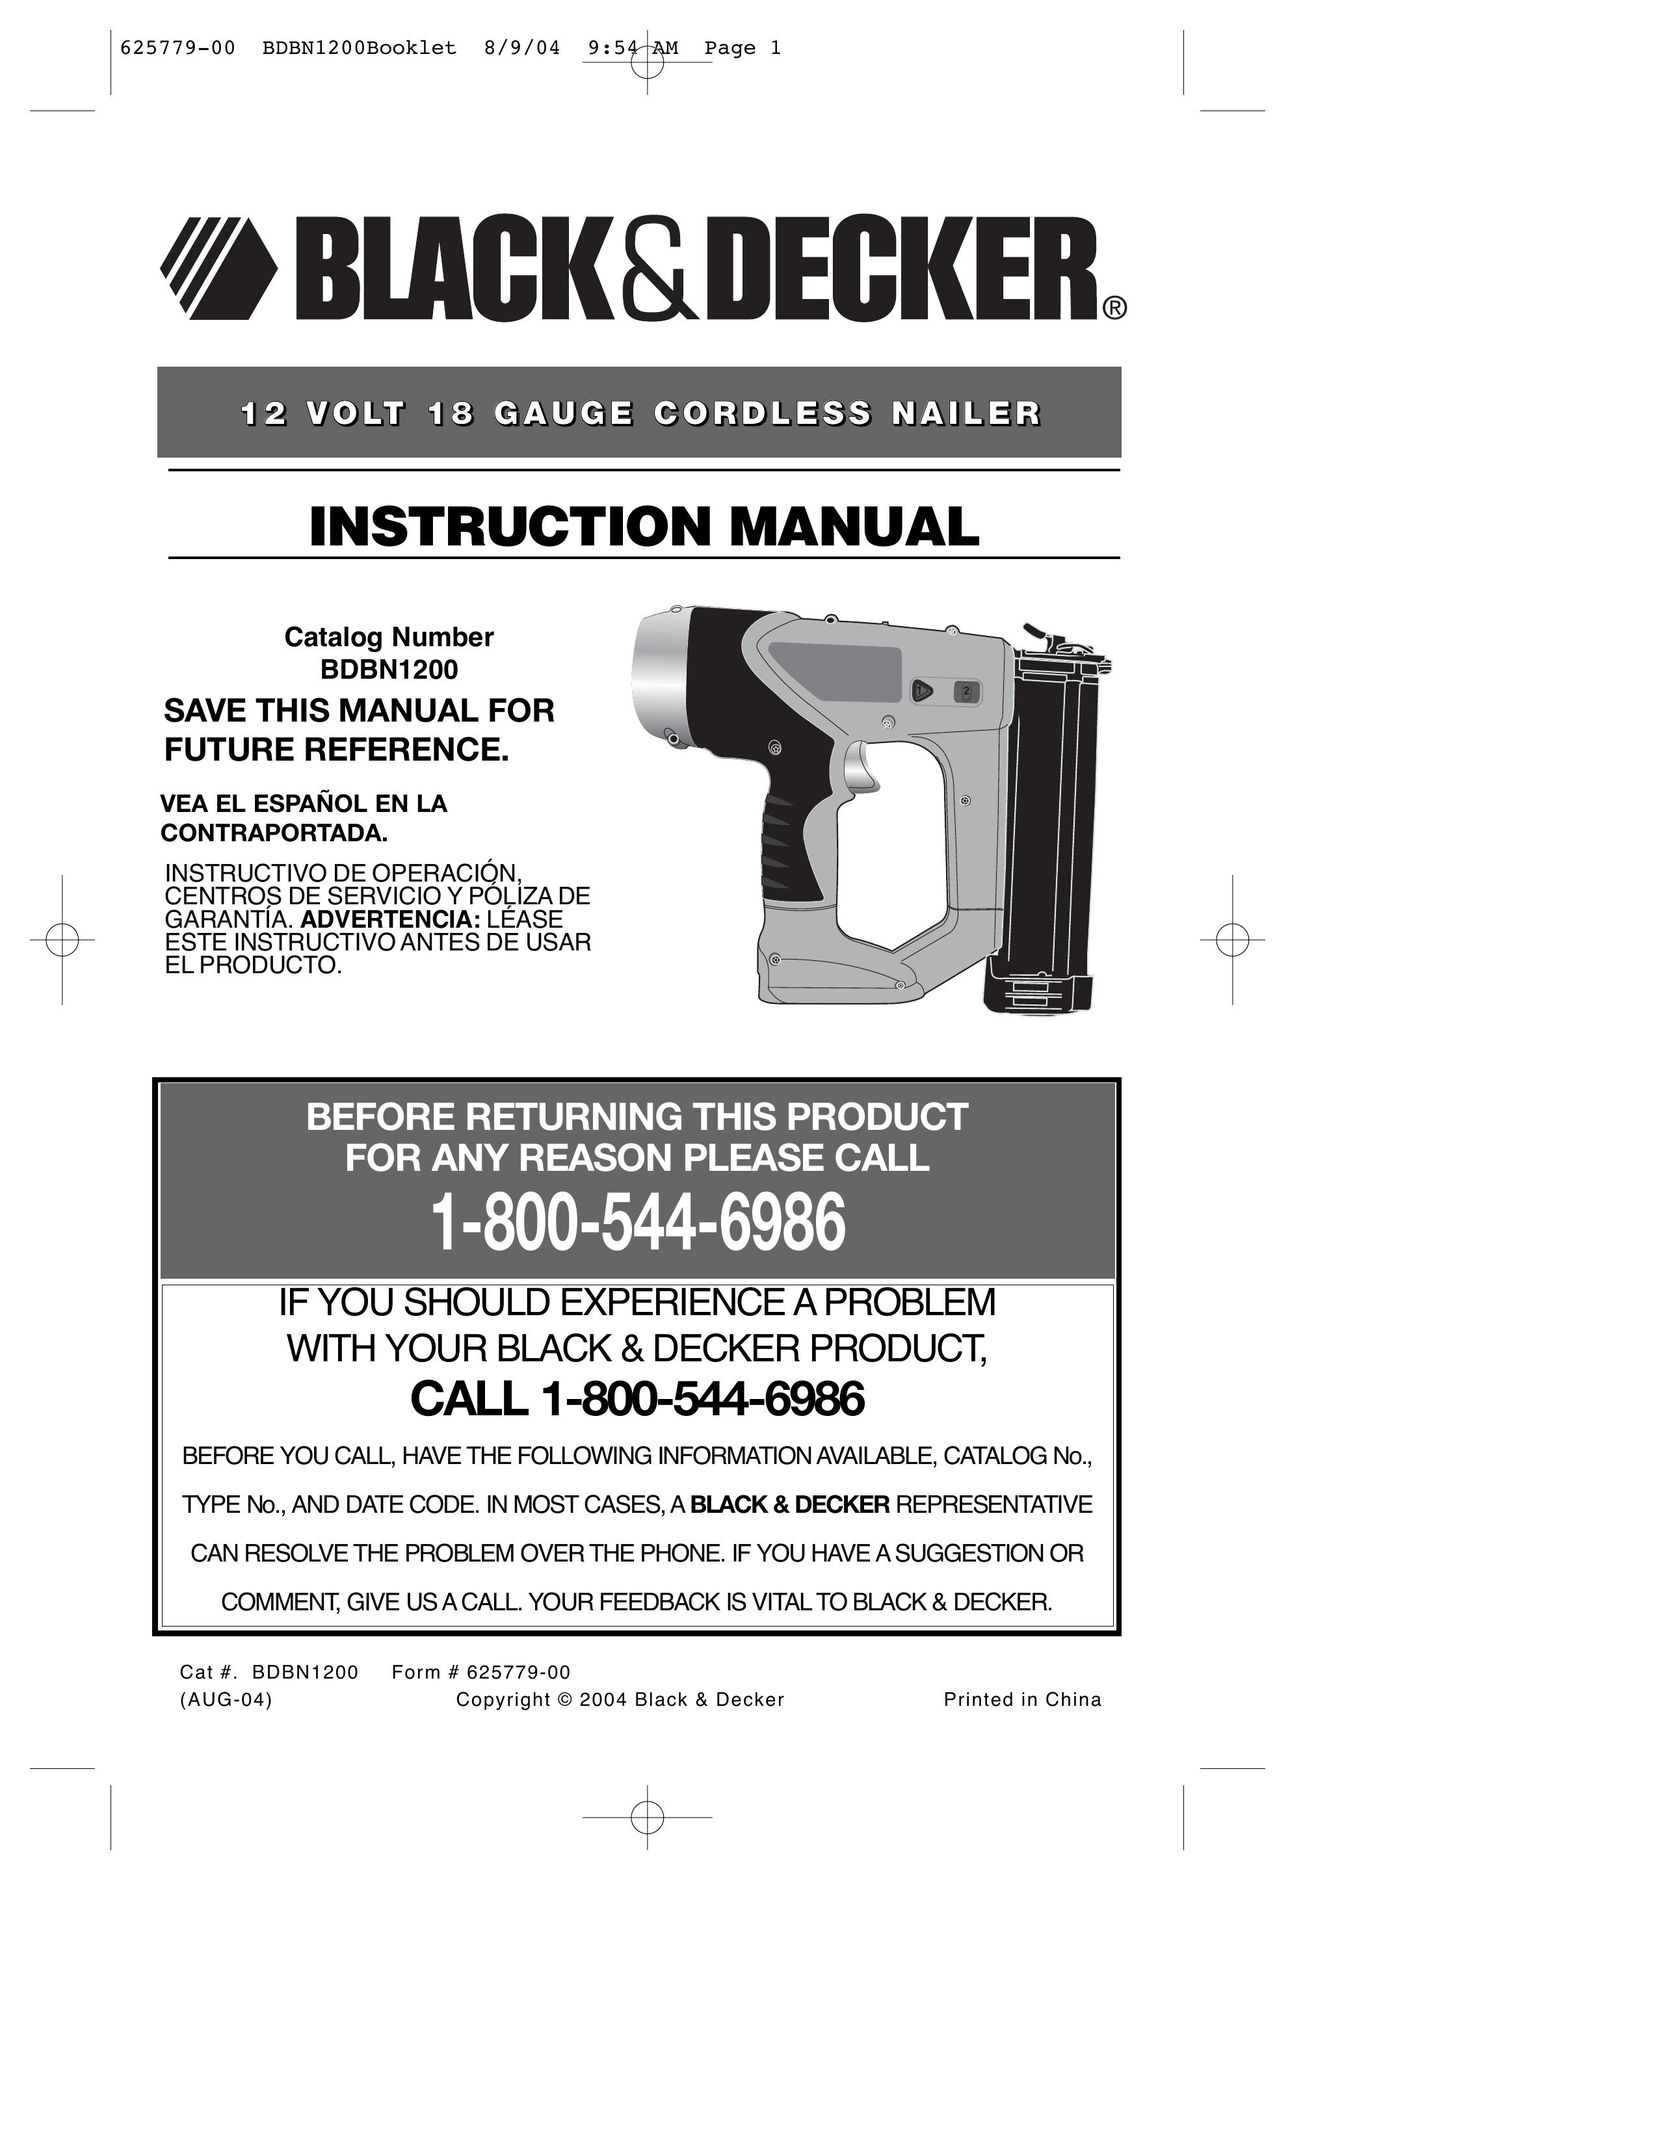 Black & Decker 625779-00 Nail Gun User Manual